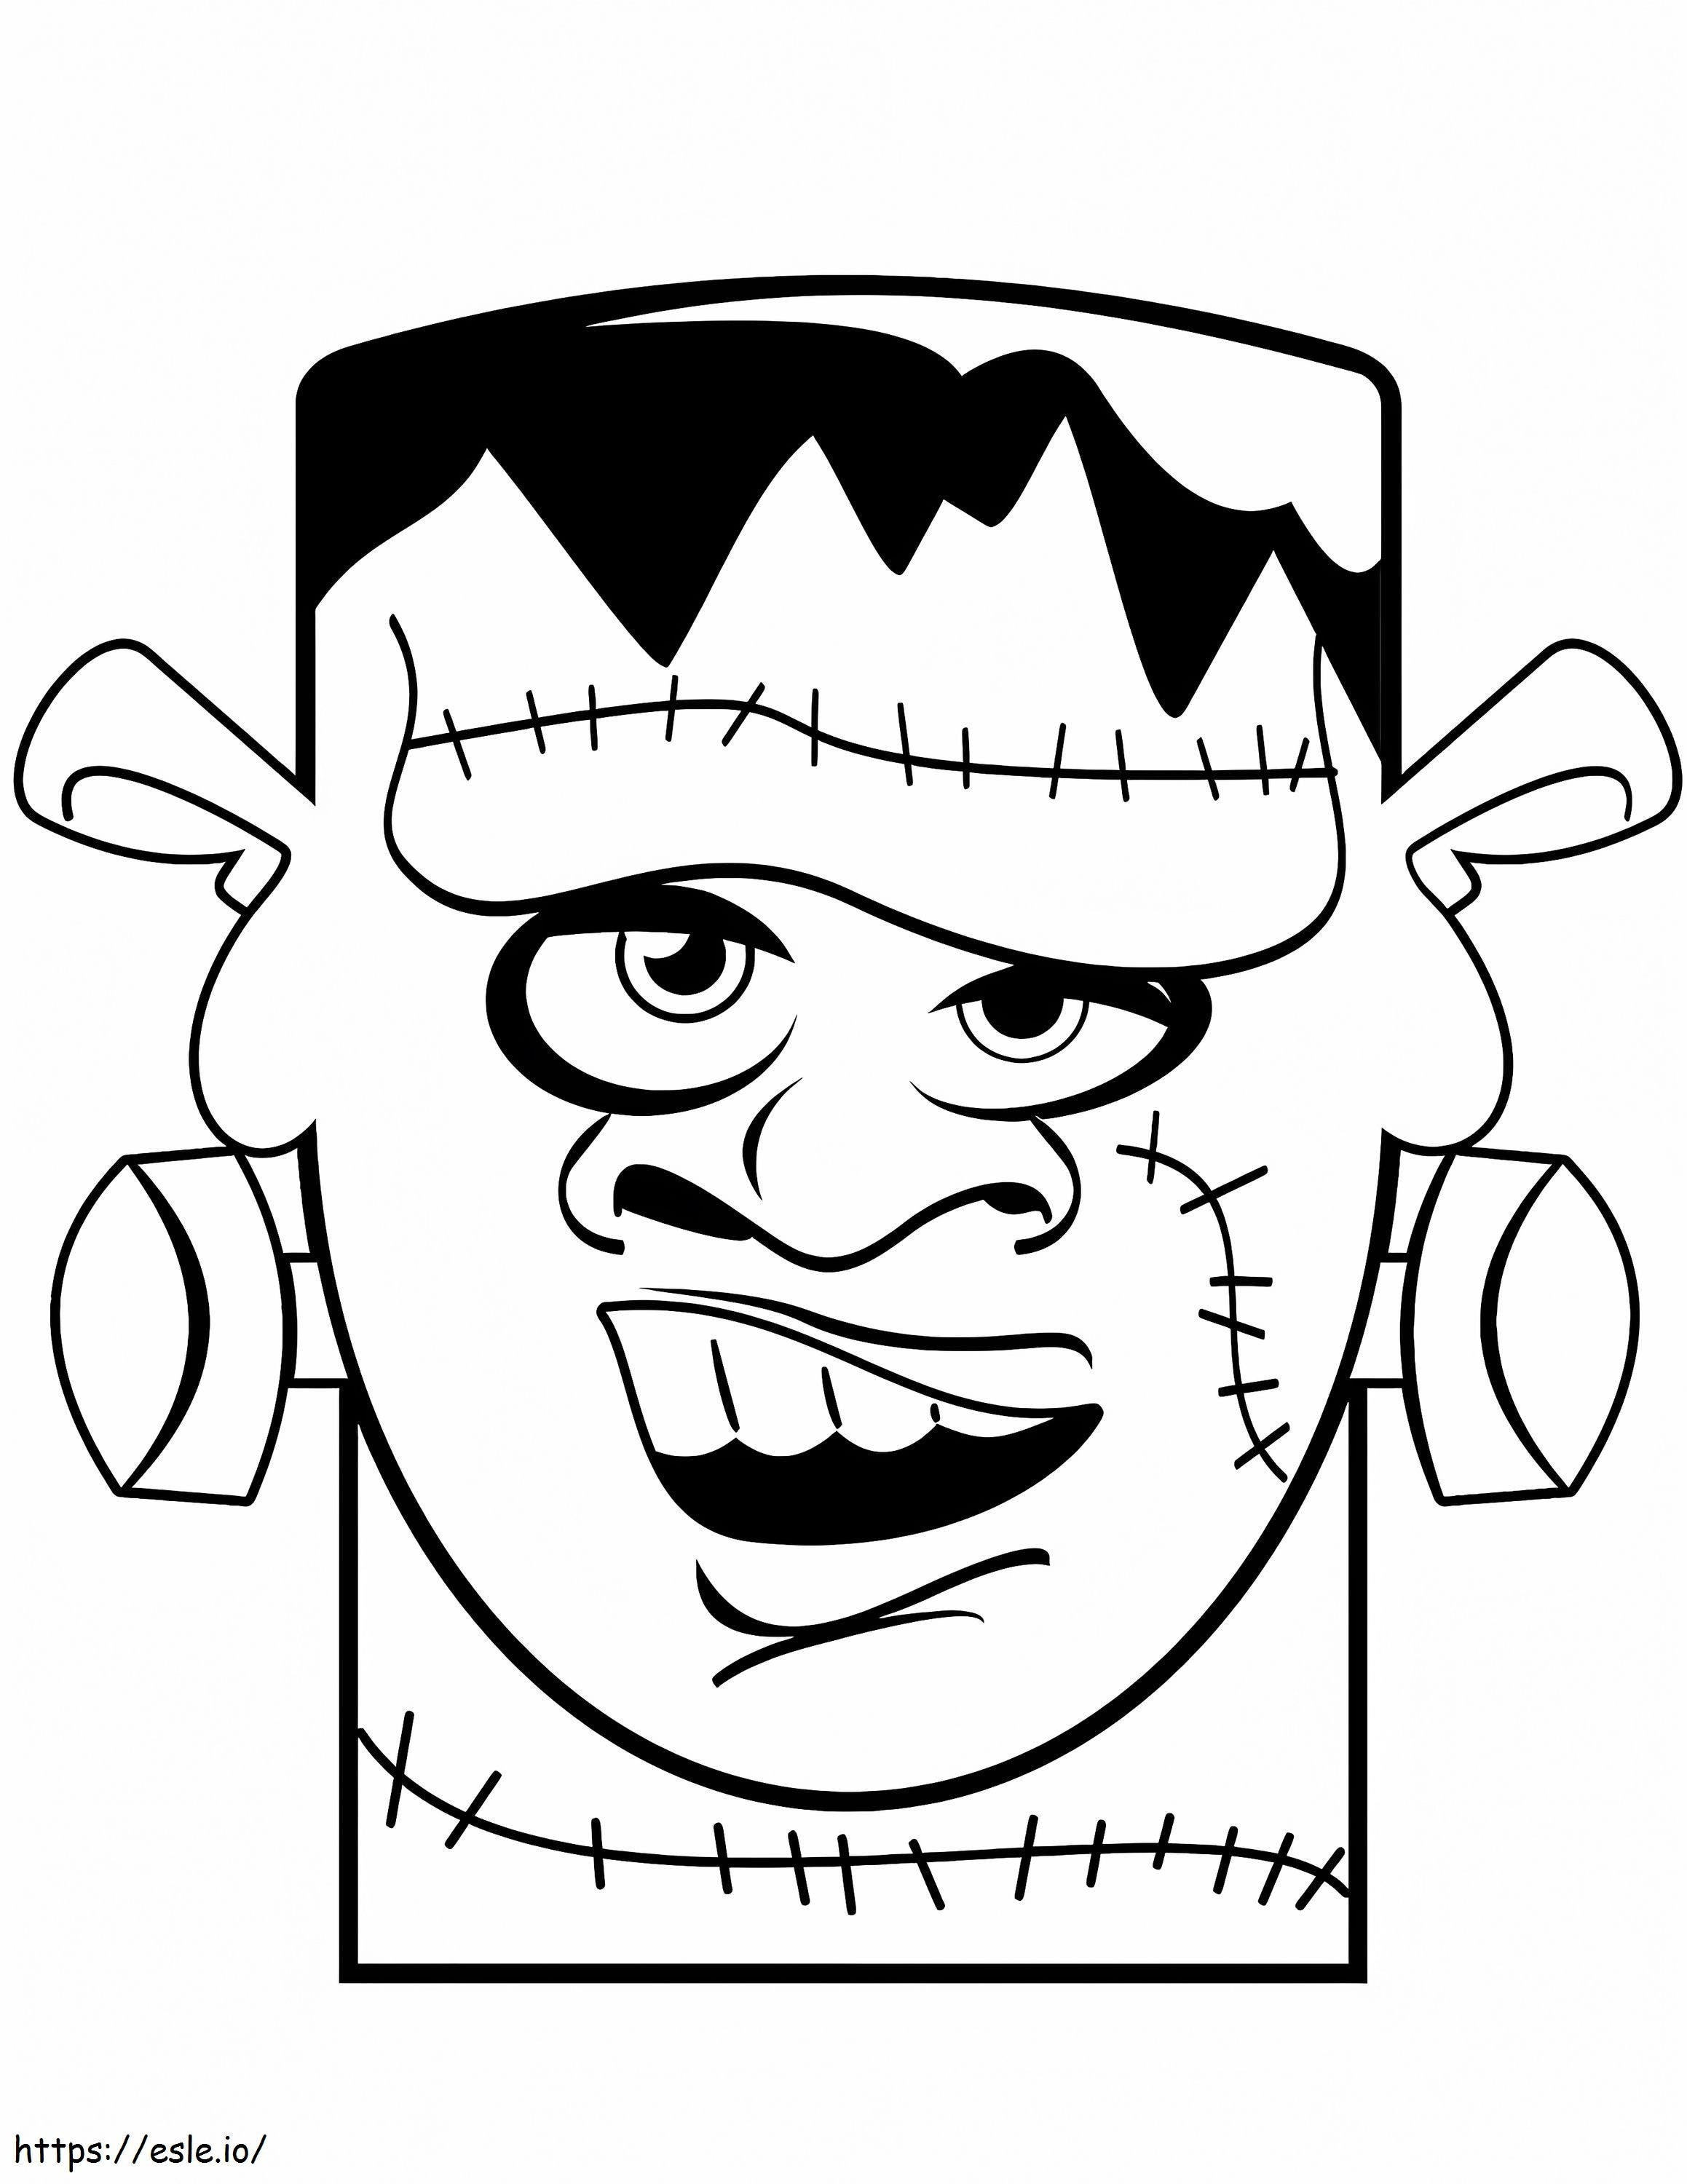 Frankenstein-Kopf ausmalbilder